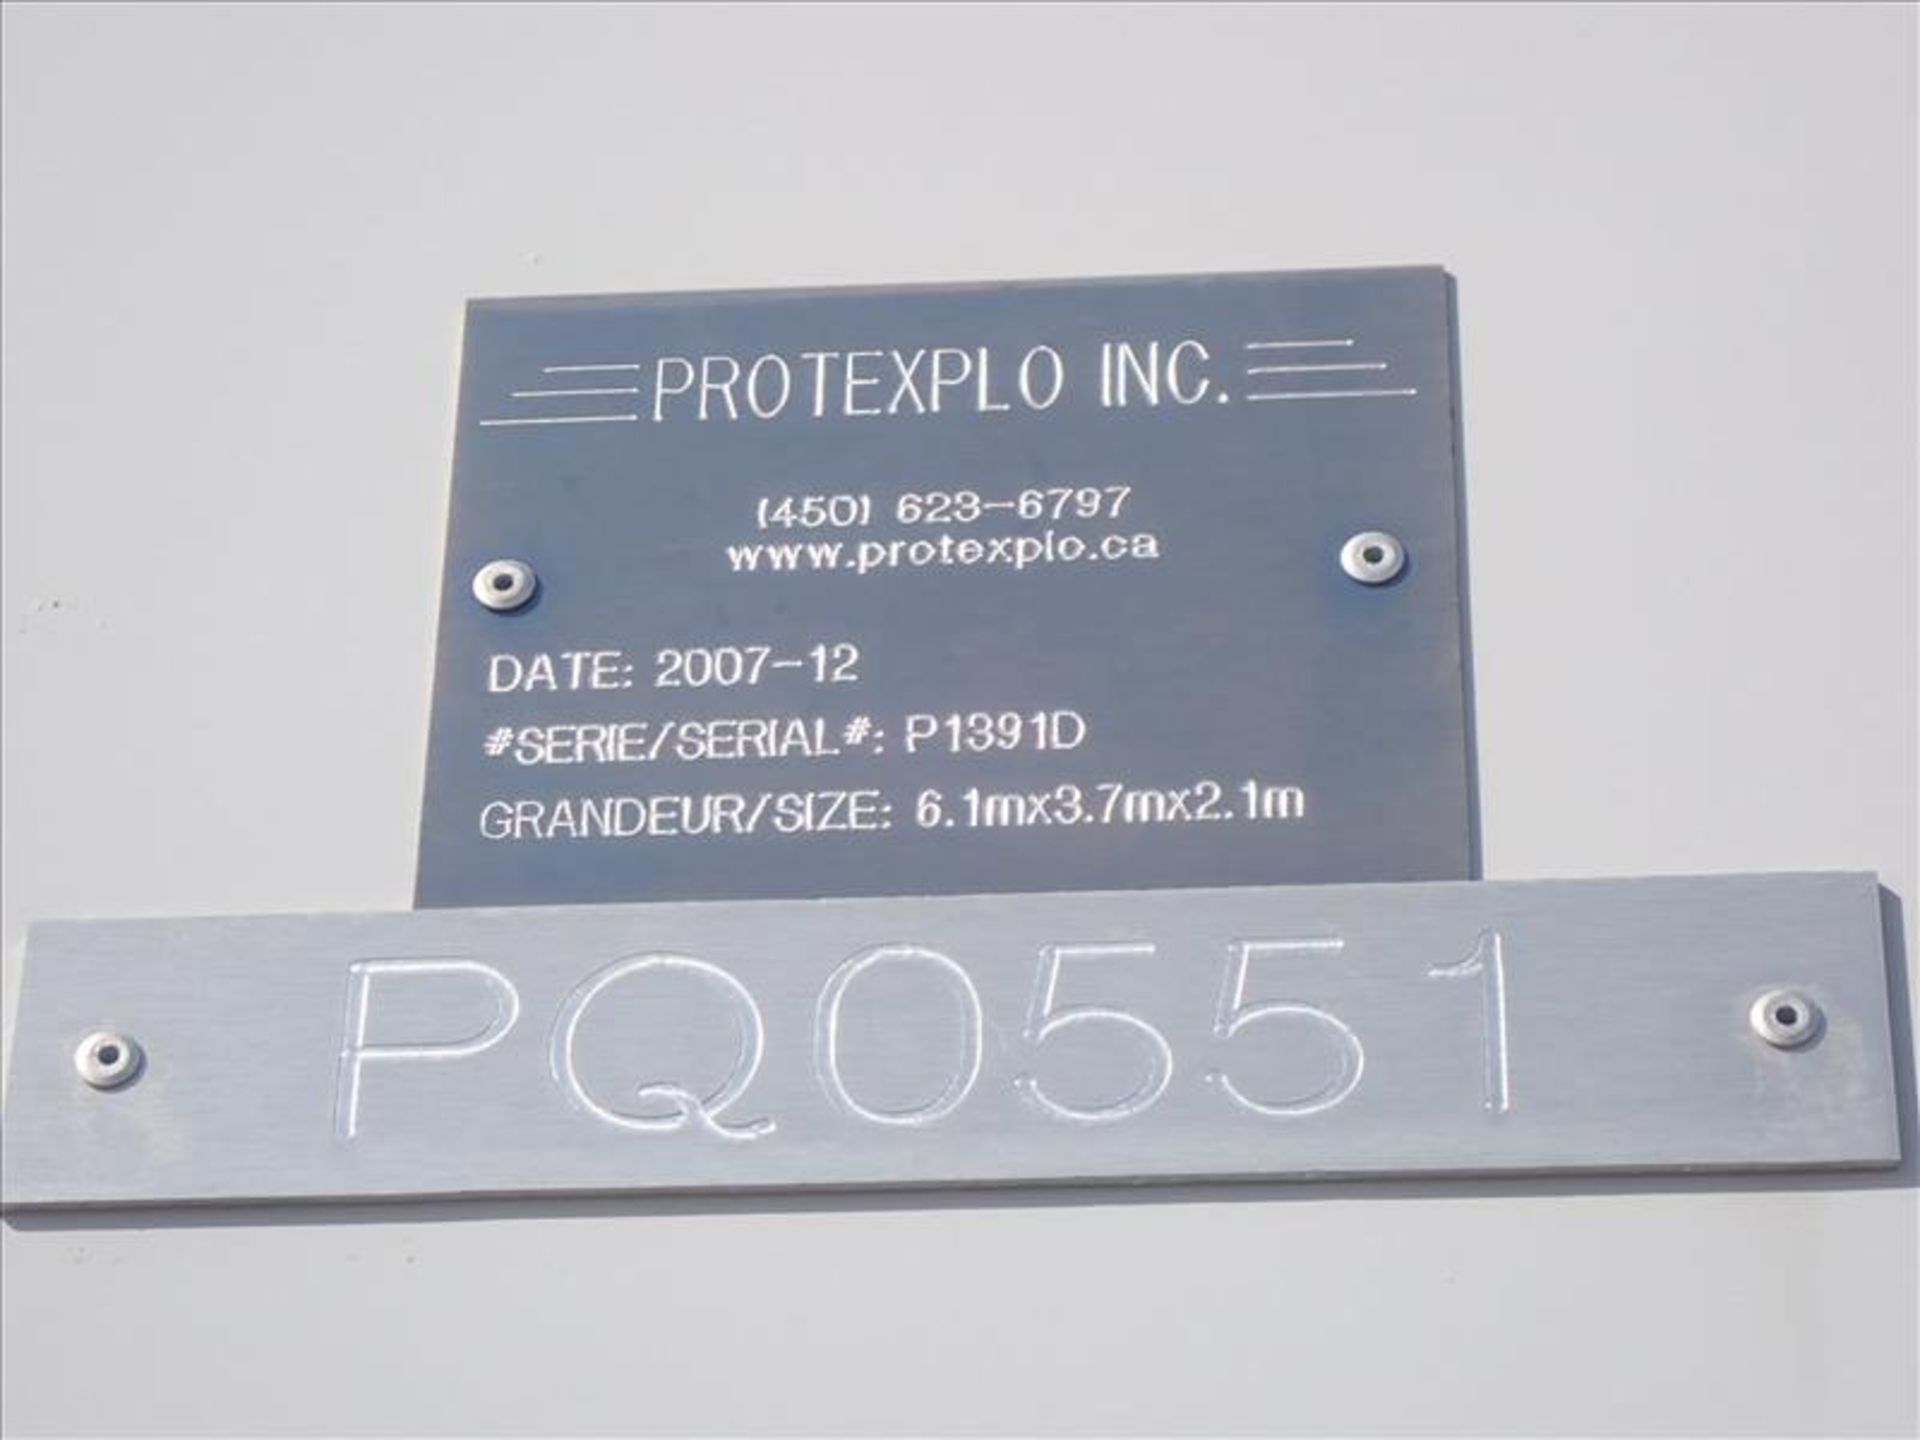 Protexplo Inc. Explosives Magazine, ser. no. P1391D (2012), 6.1m x 3.7m x 2.1m (Tag No. 4880) [Sea - Image 5 of 7